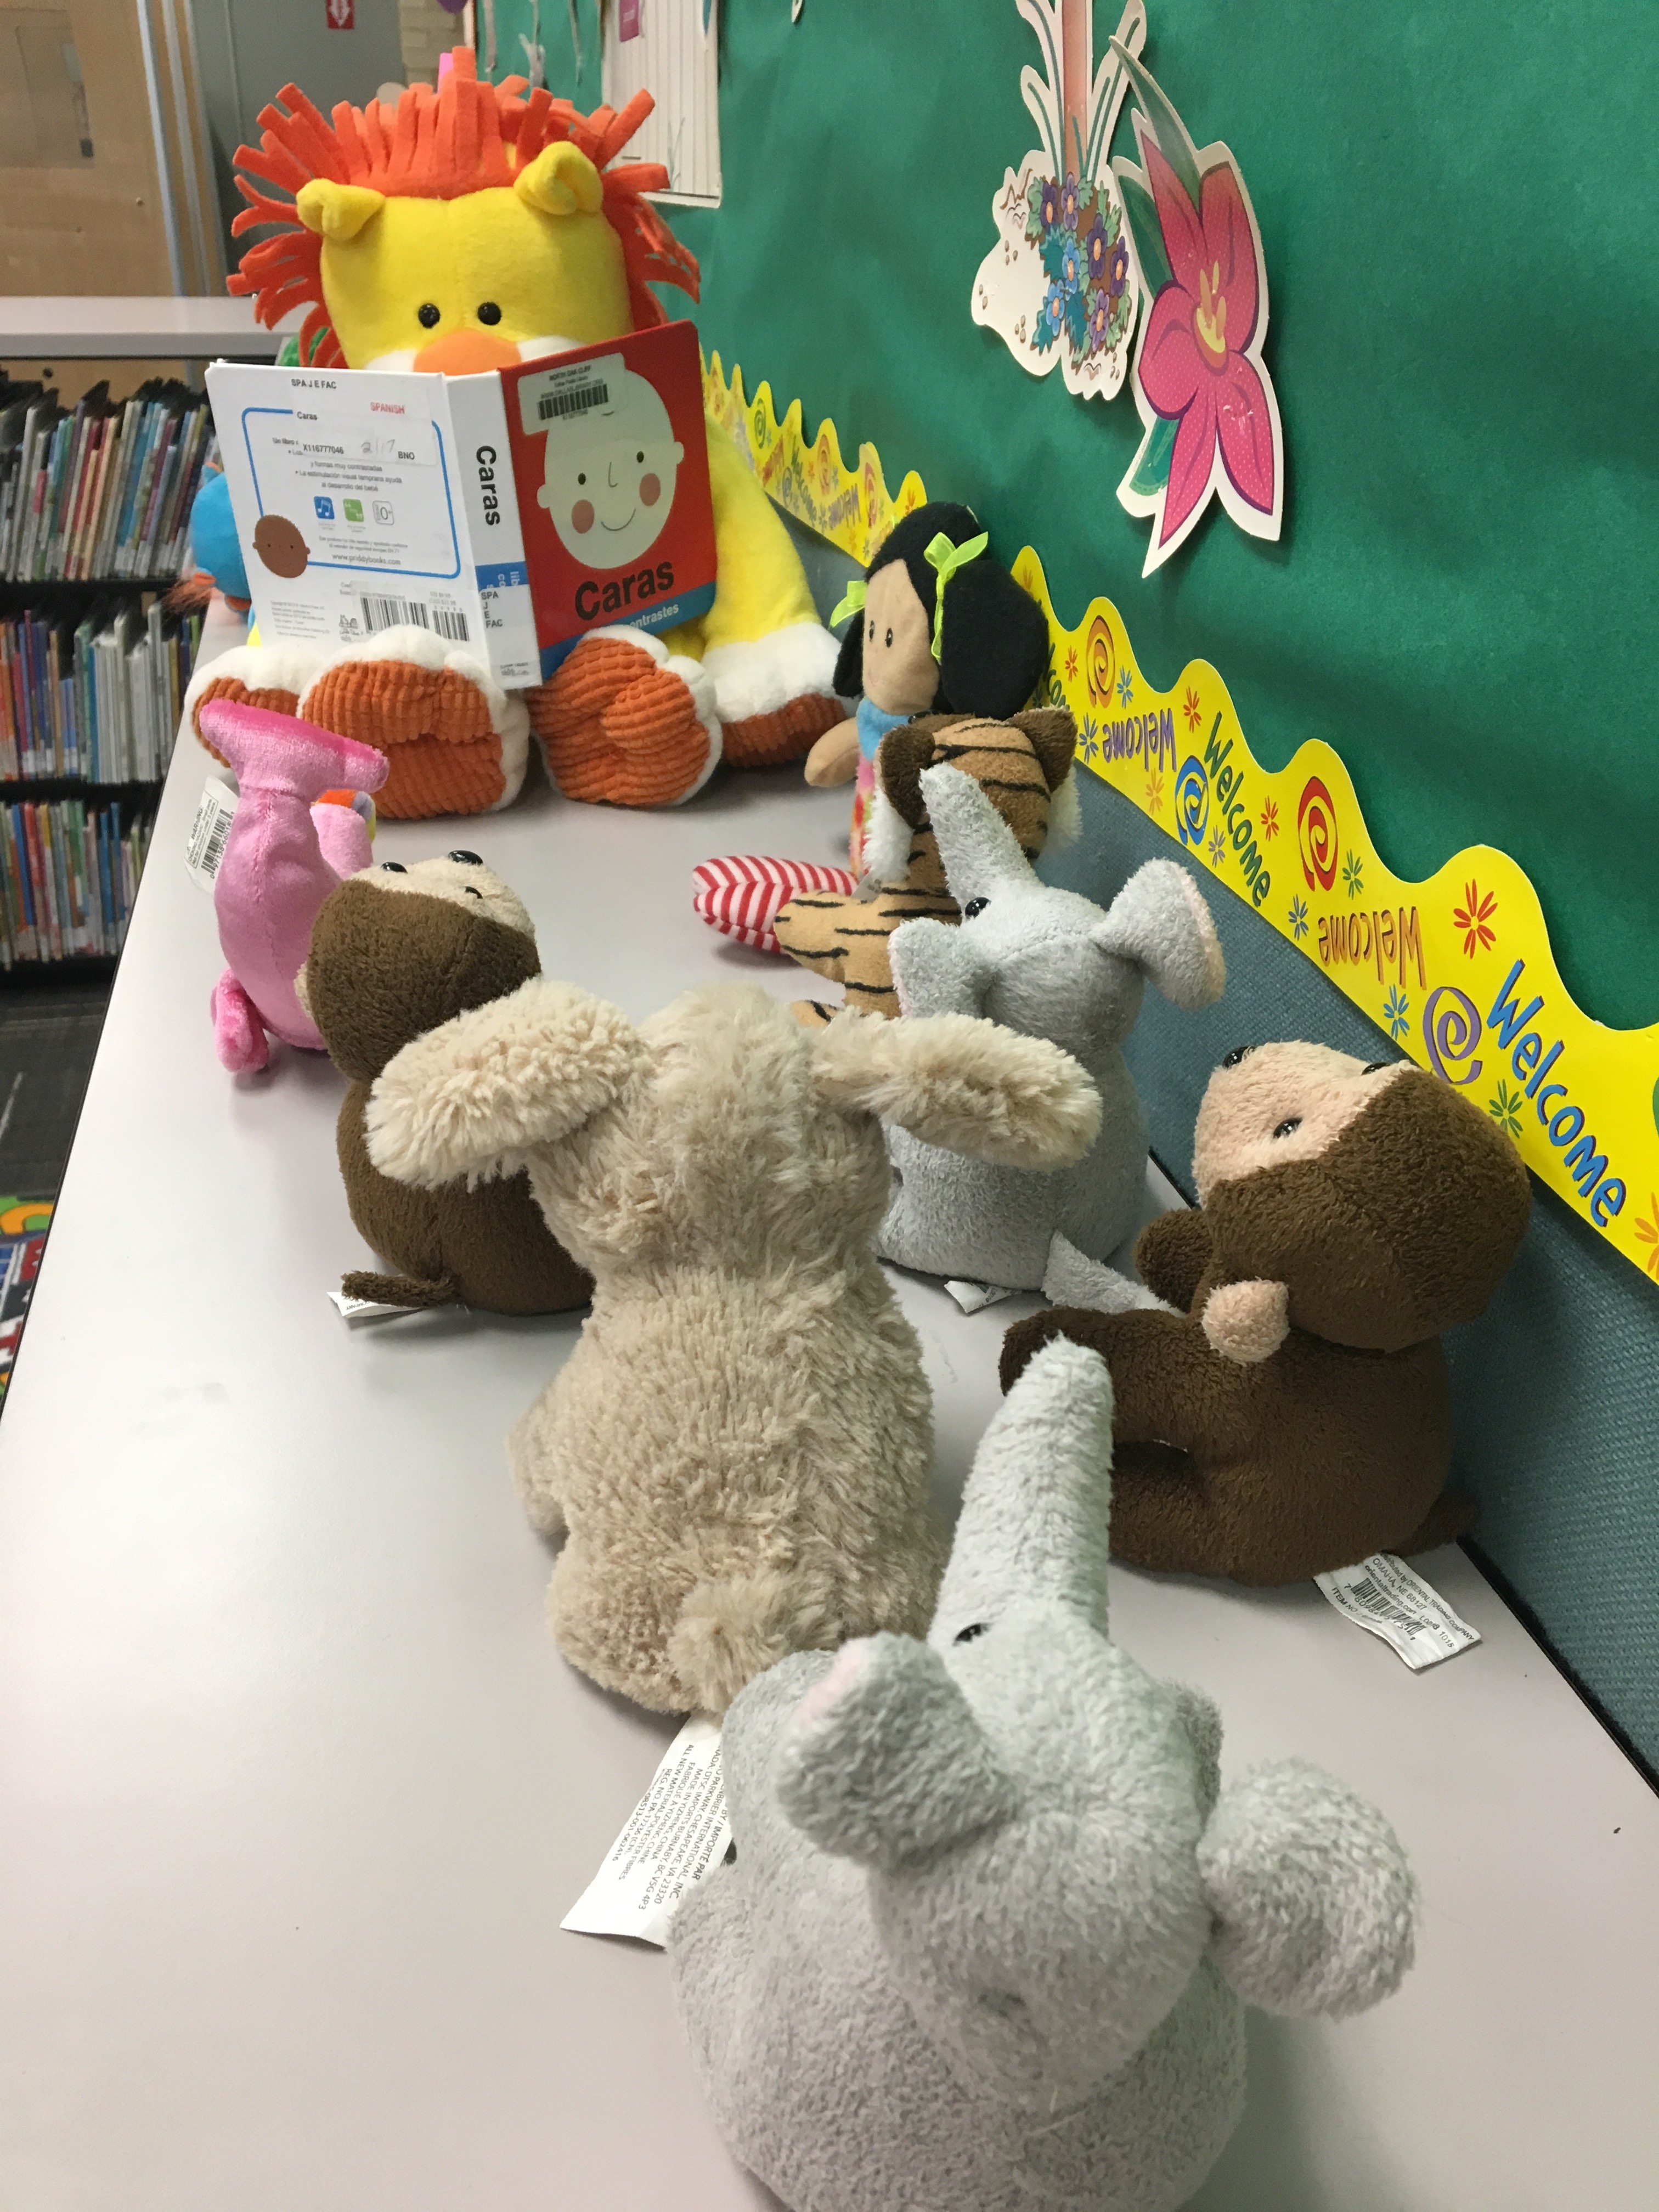 Row of stuffed animals sitting on top of bookshelves